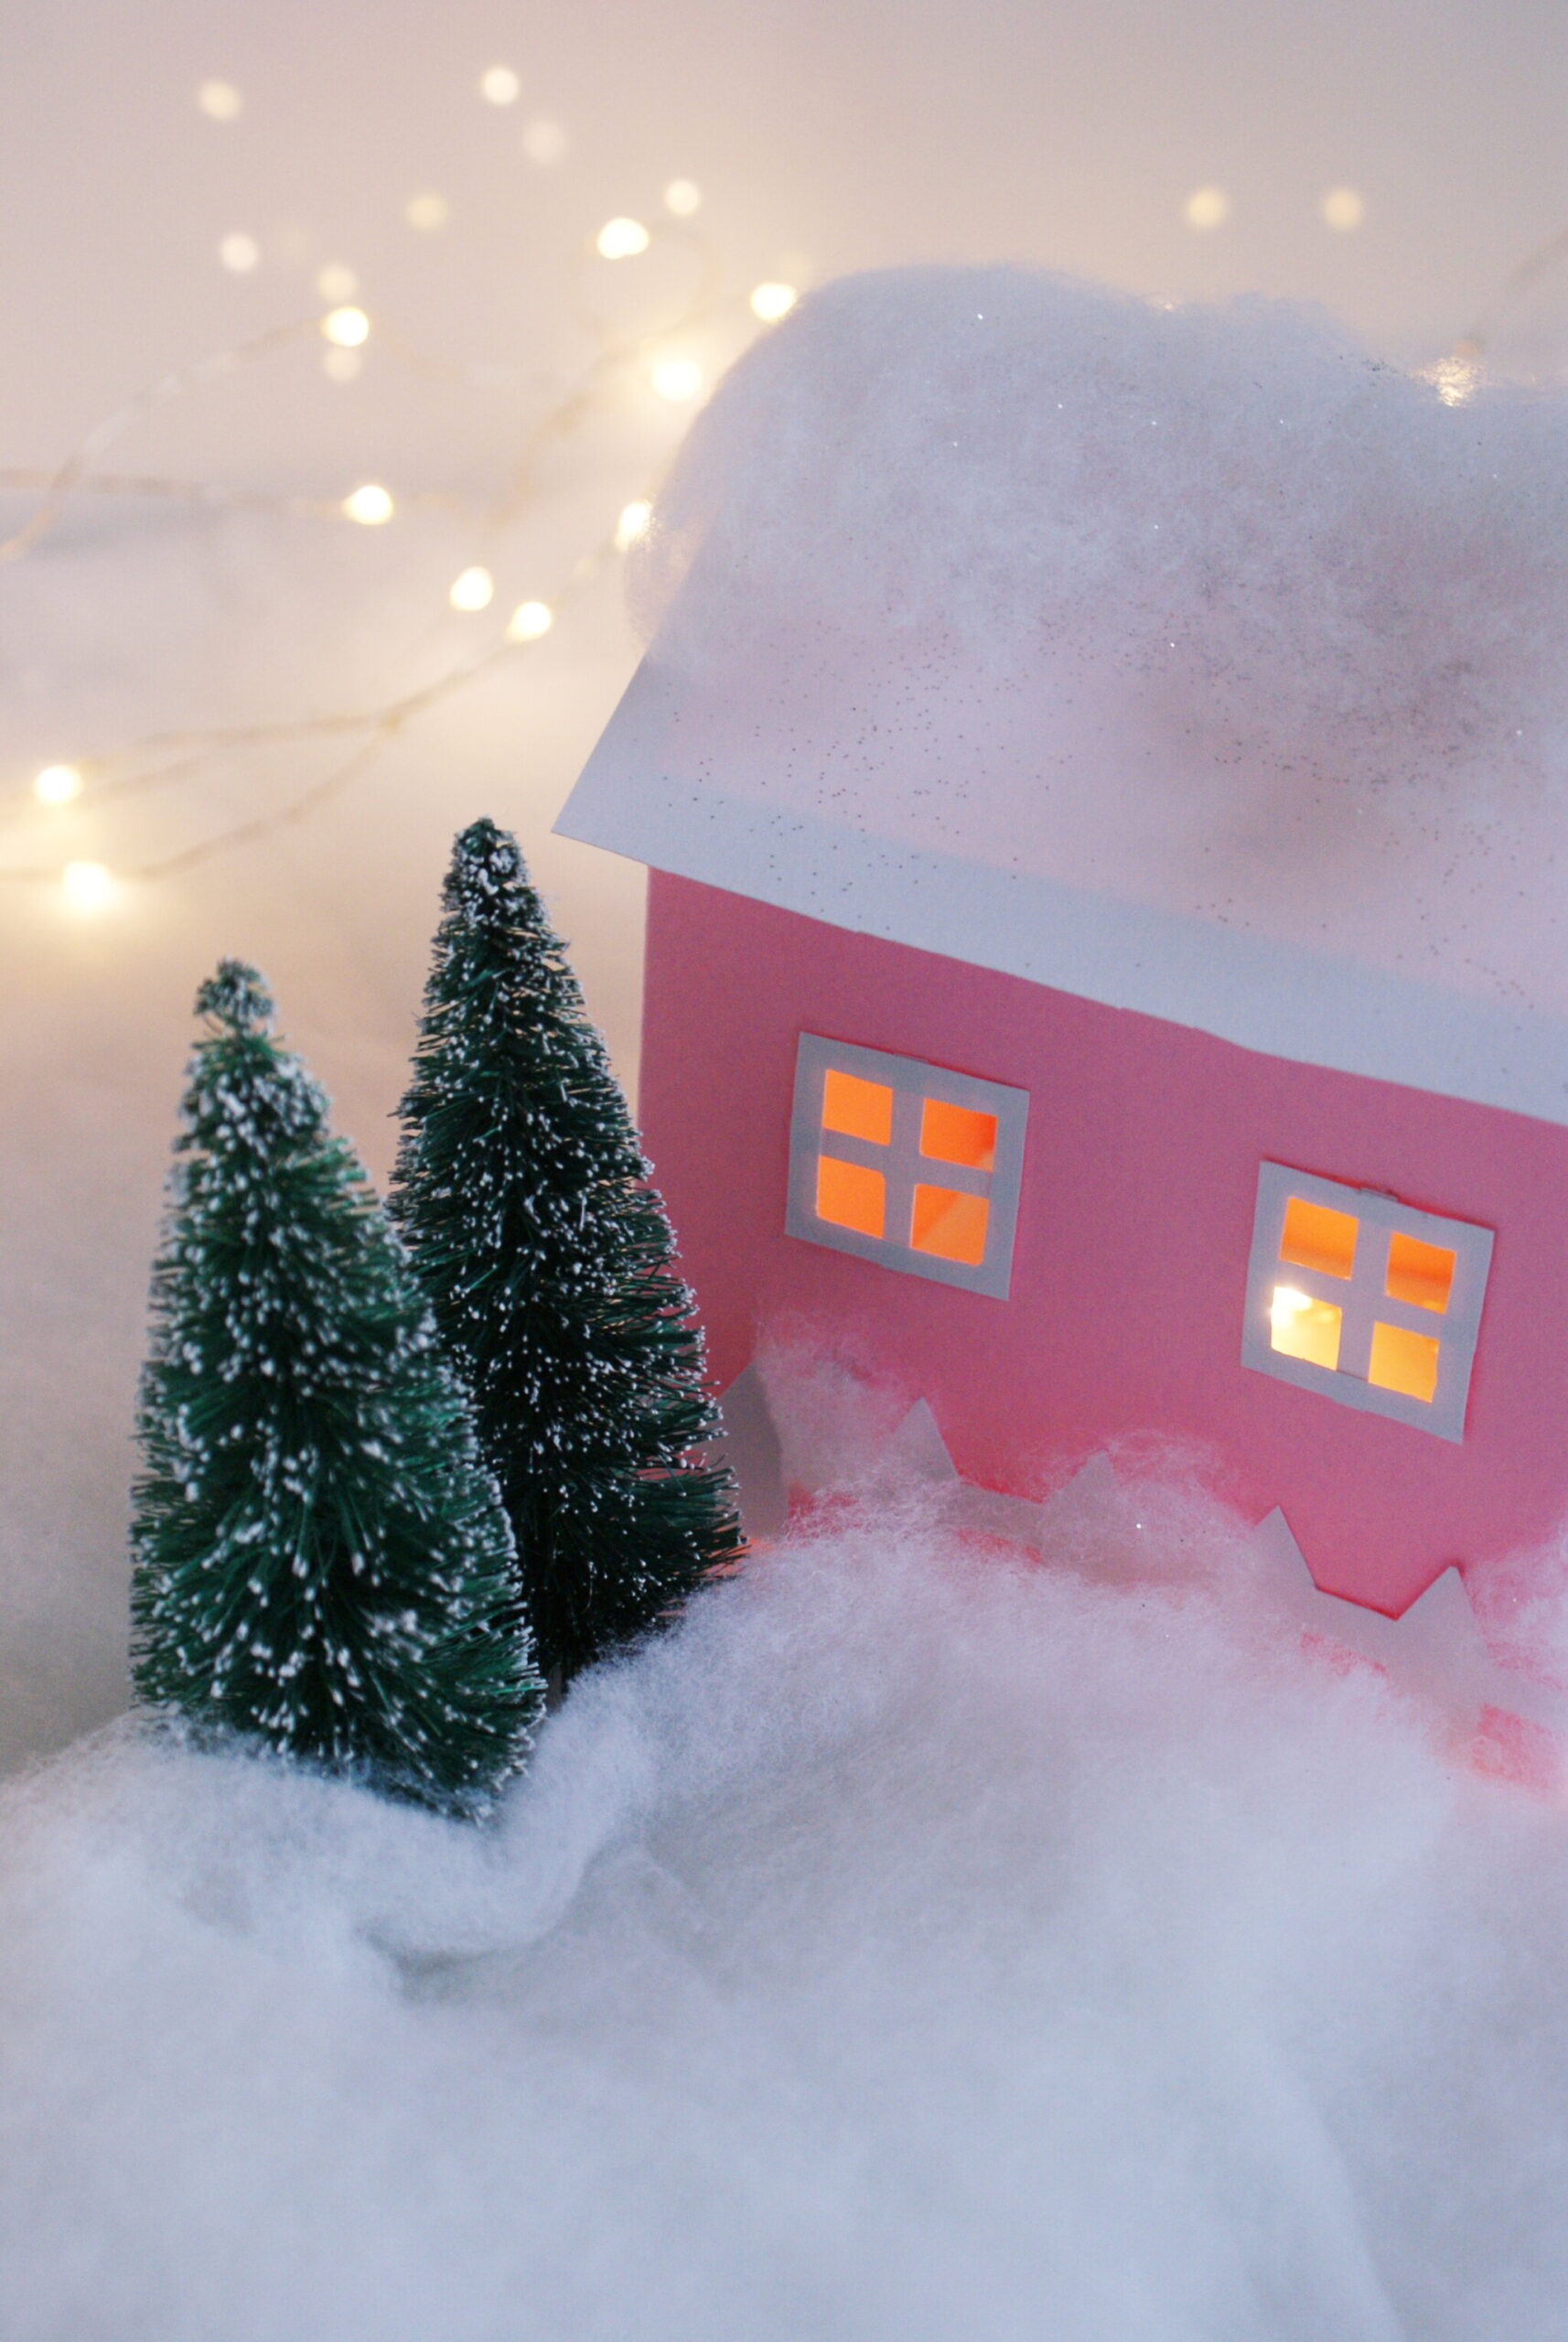 diy paper house christmas winter scene village craft idea decor home easy tutorial glitter fairy handmade